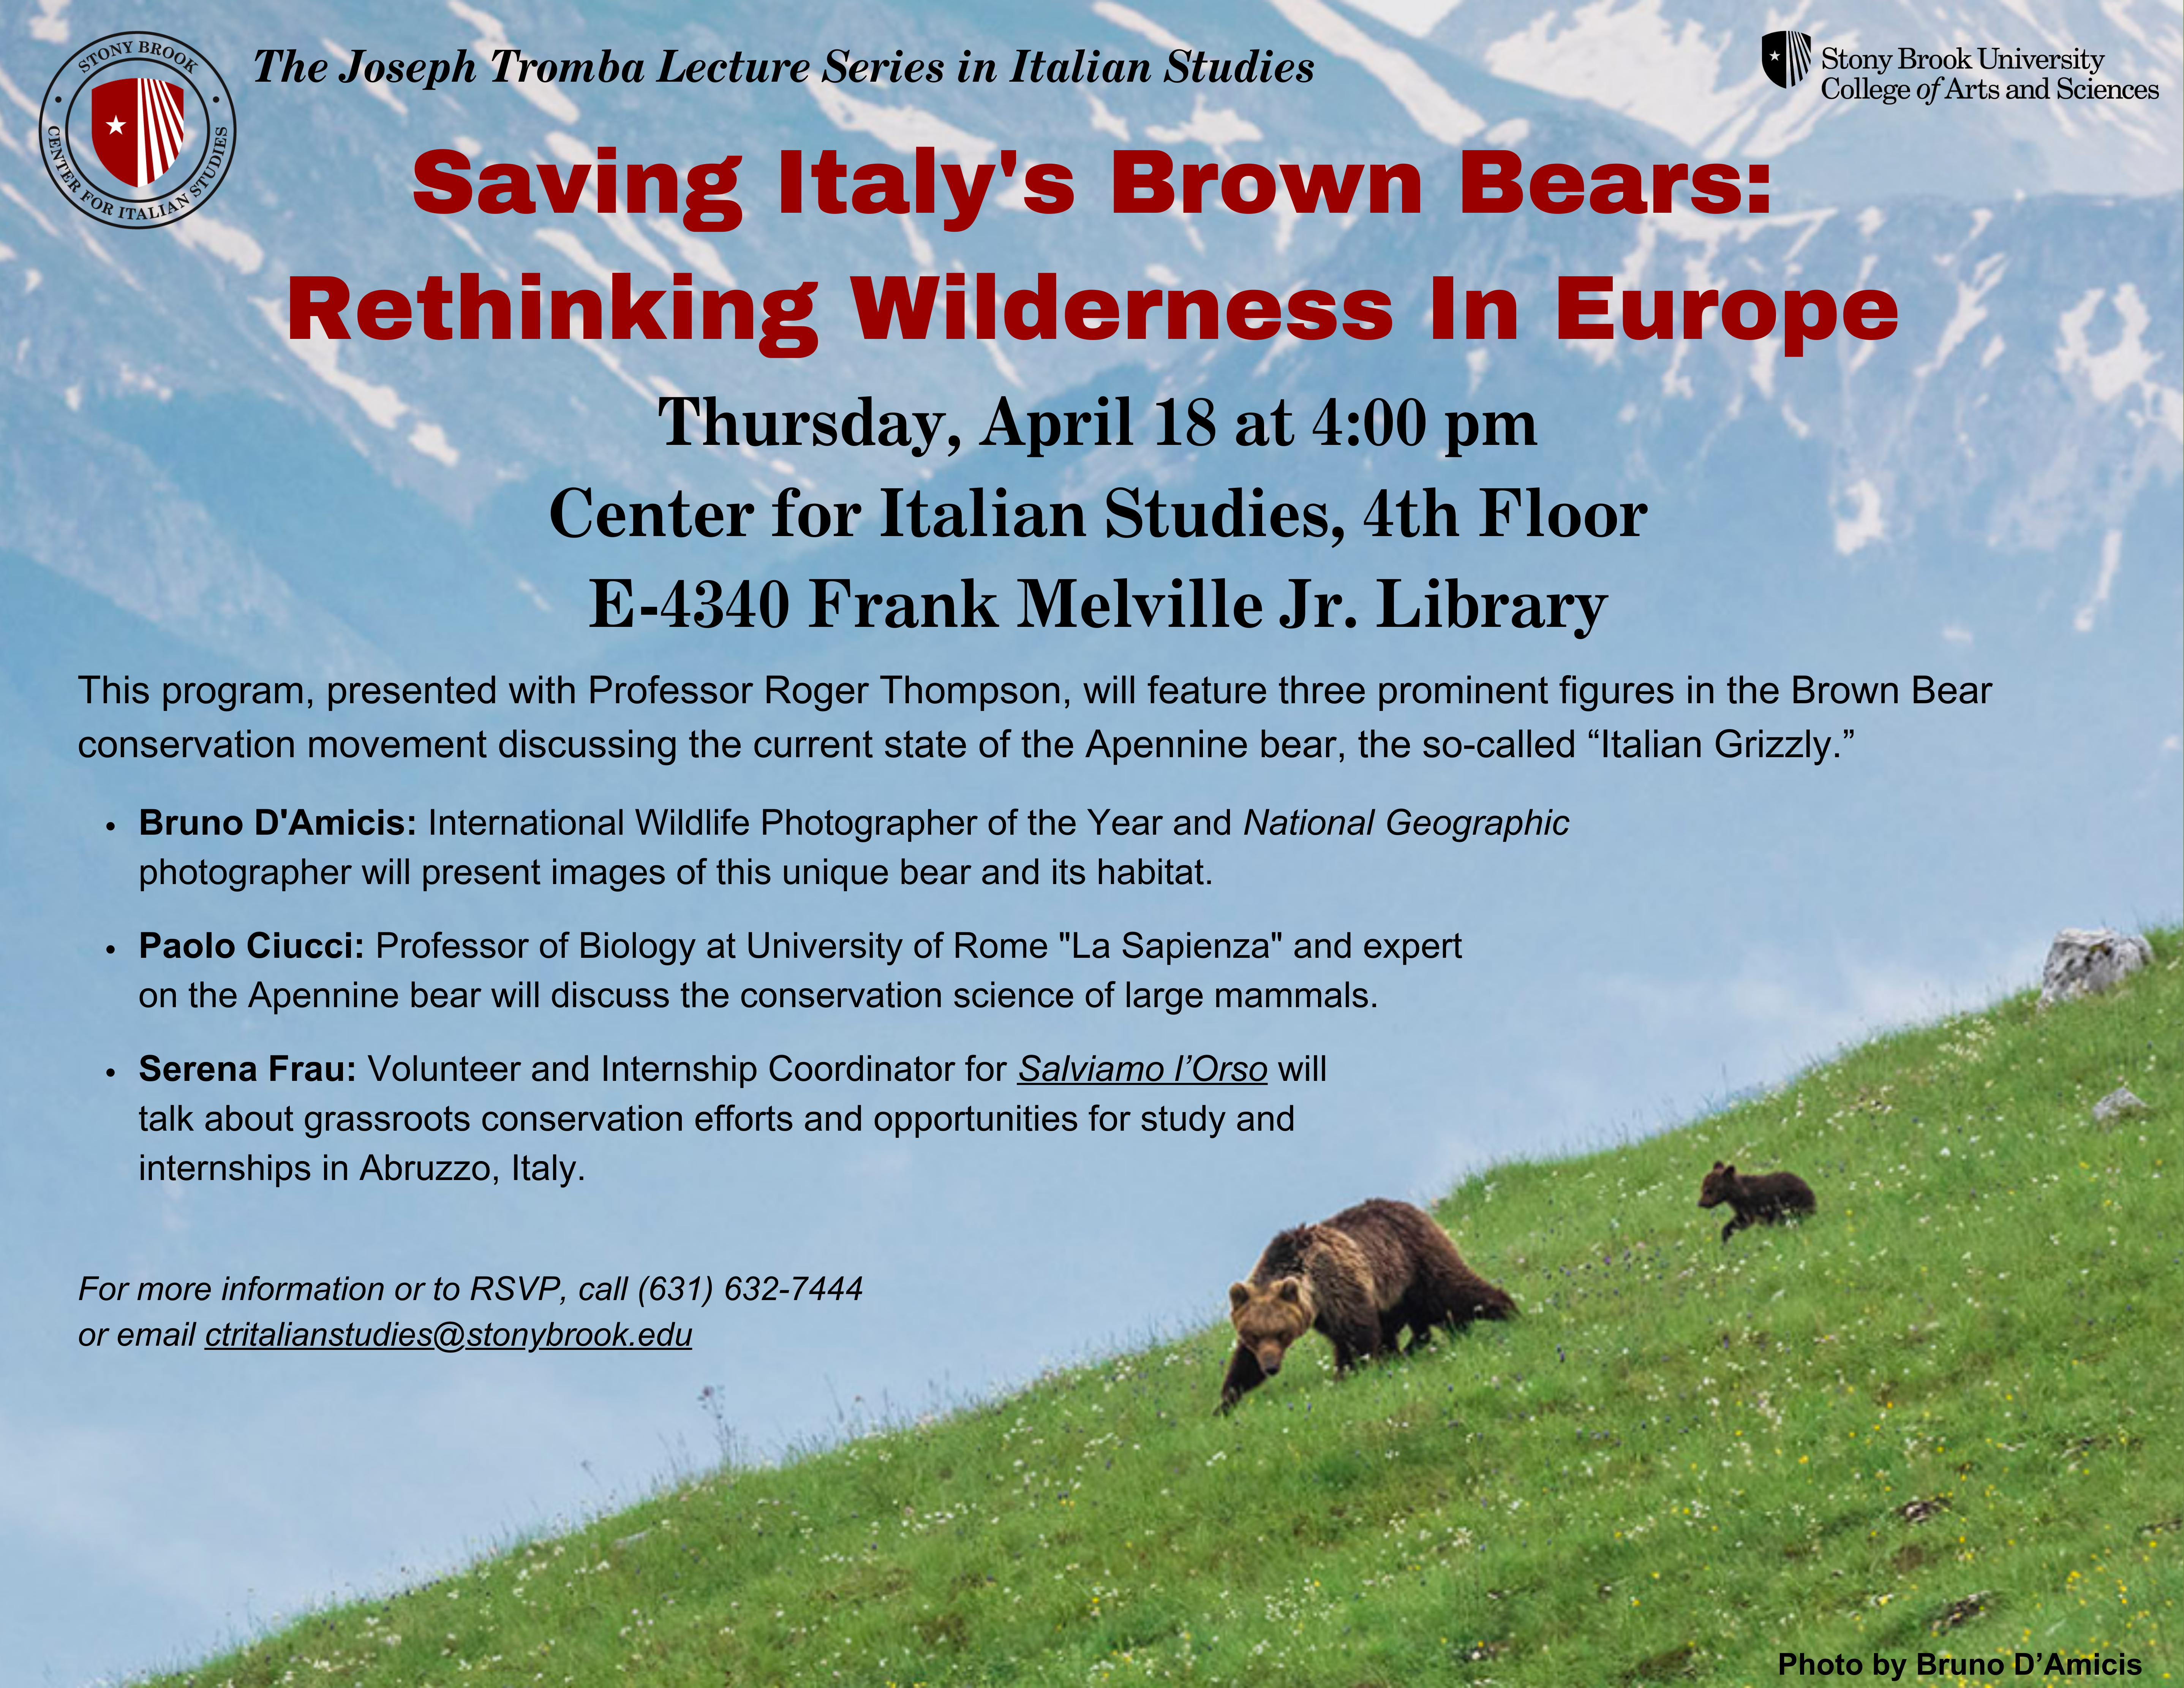 Saving Italy's Brown Bears Flyer